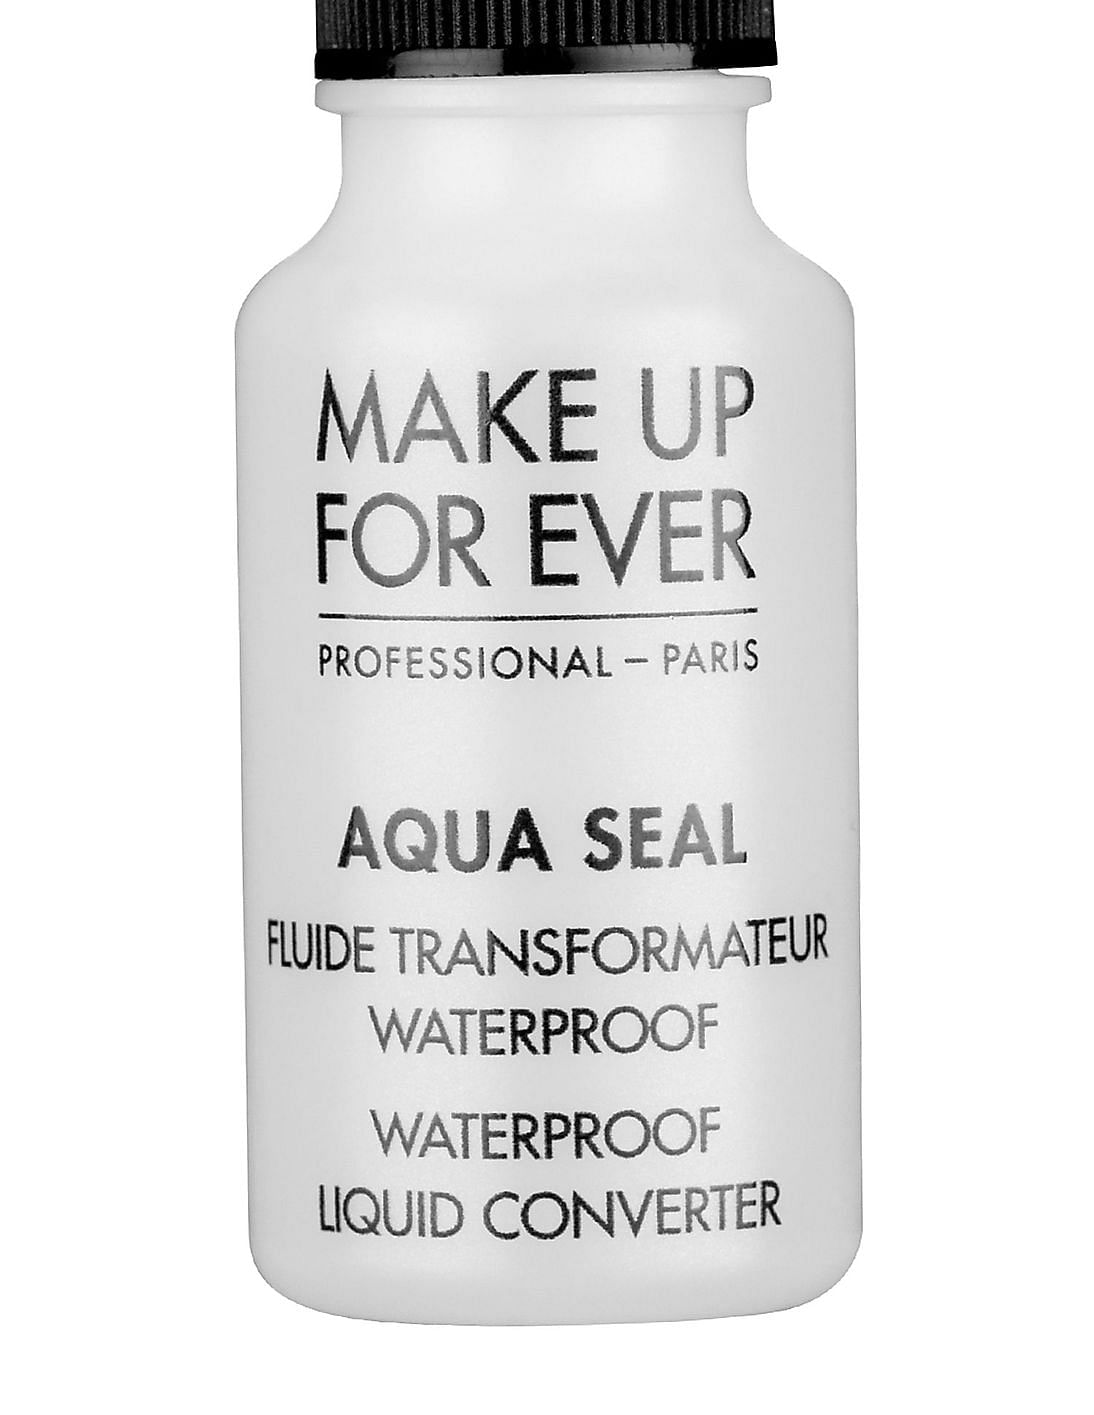 Buy MAKE UP FOR EVER Aqua Seal Waterproof Liquid Converter - NNNOW.com